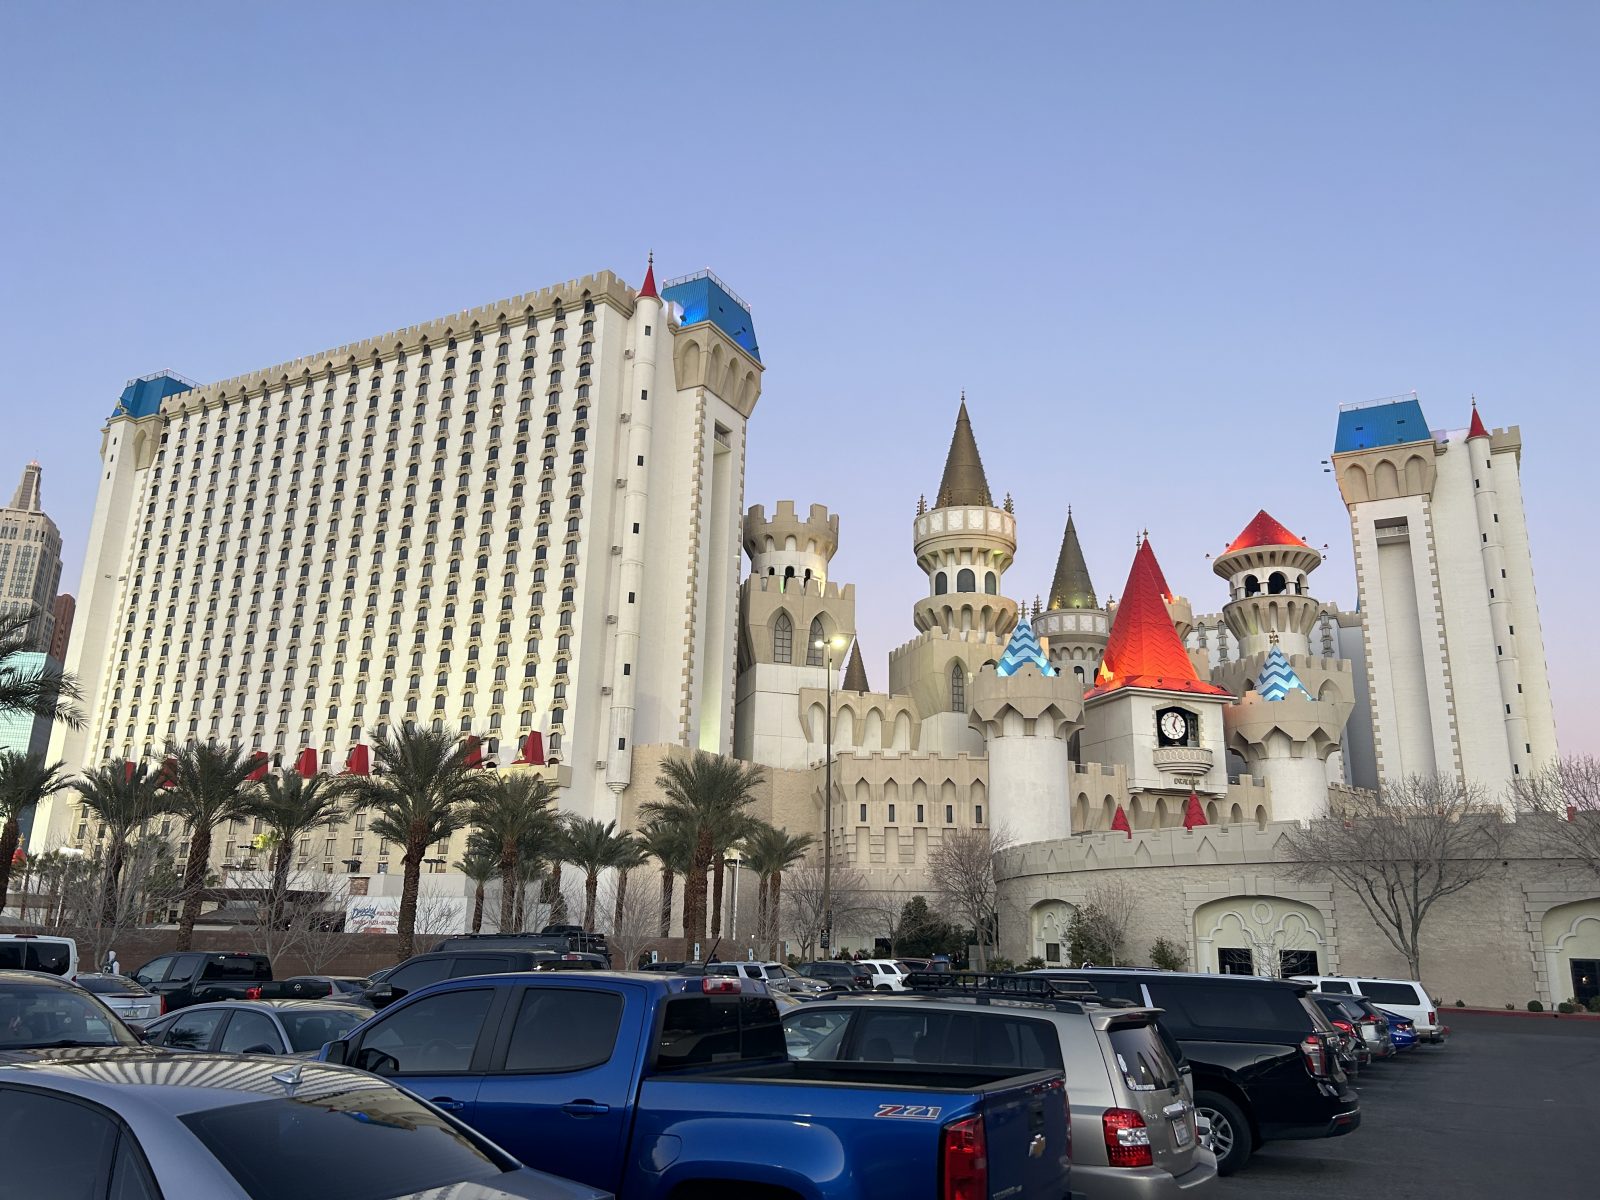 GALLERY: Tournament of Kings dinner show at Excalibur Las Vegas – AmericaJR